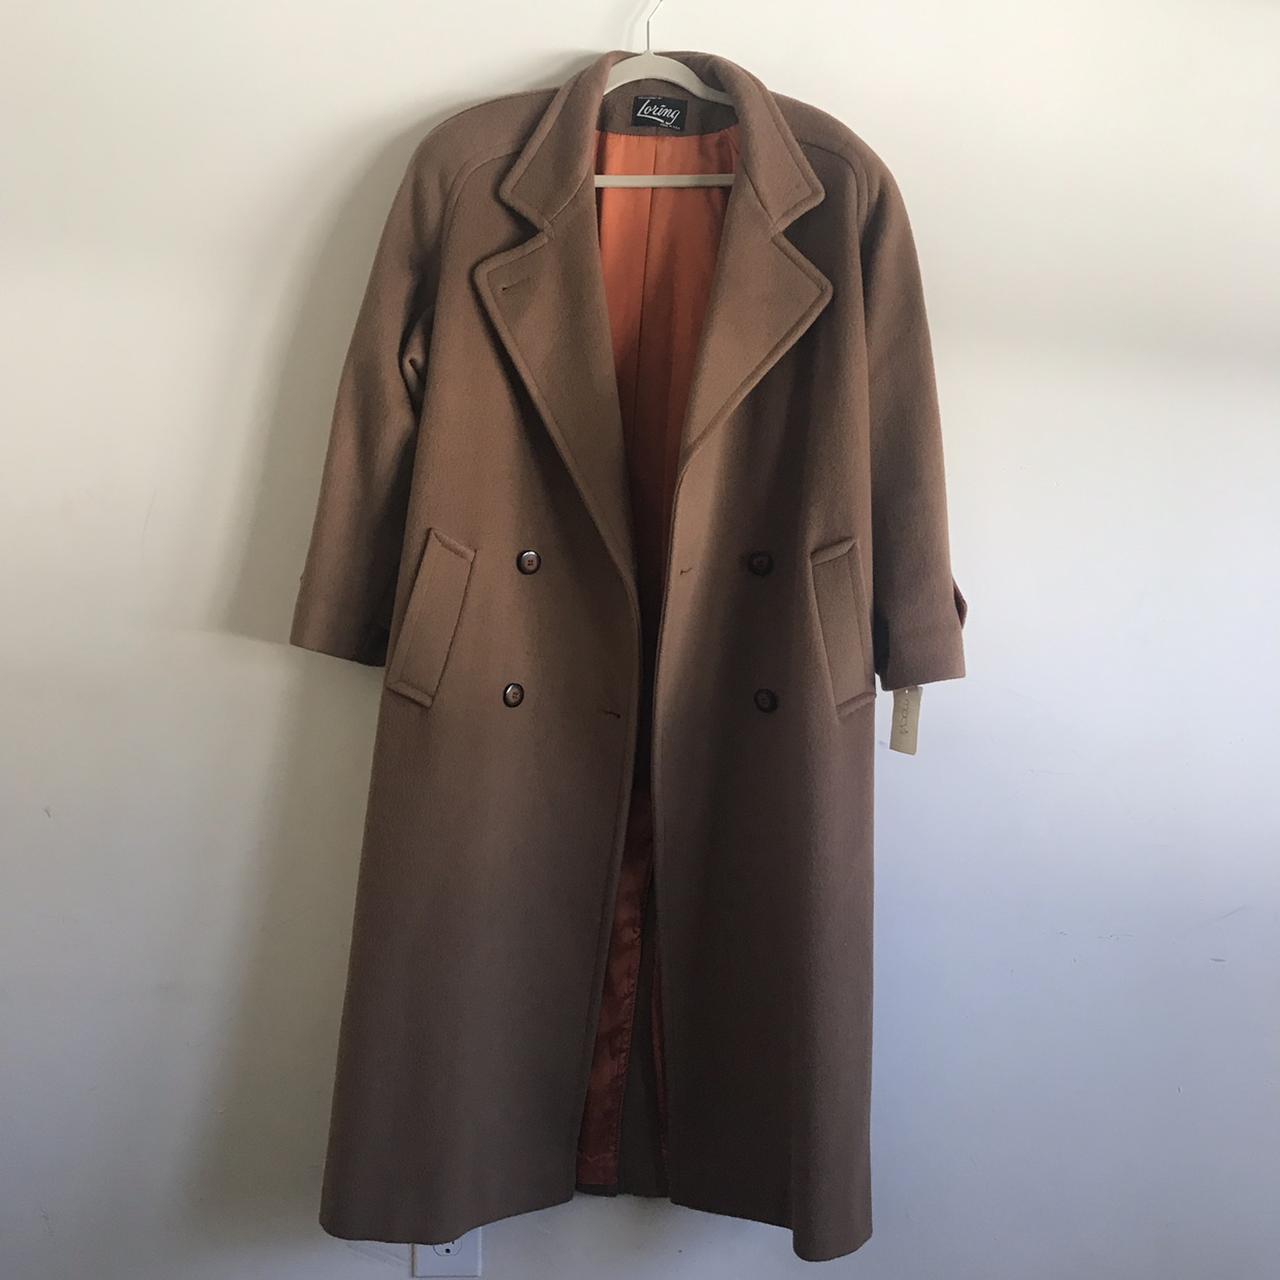 Circa 1960-1970’s vintage %100 wool coat with... - Depop